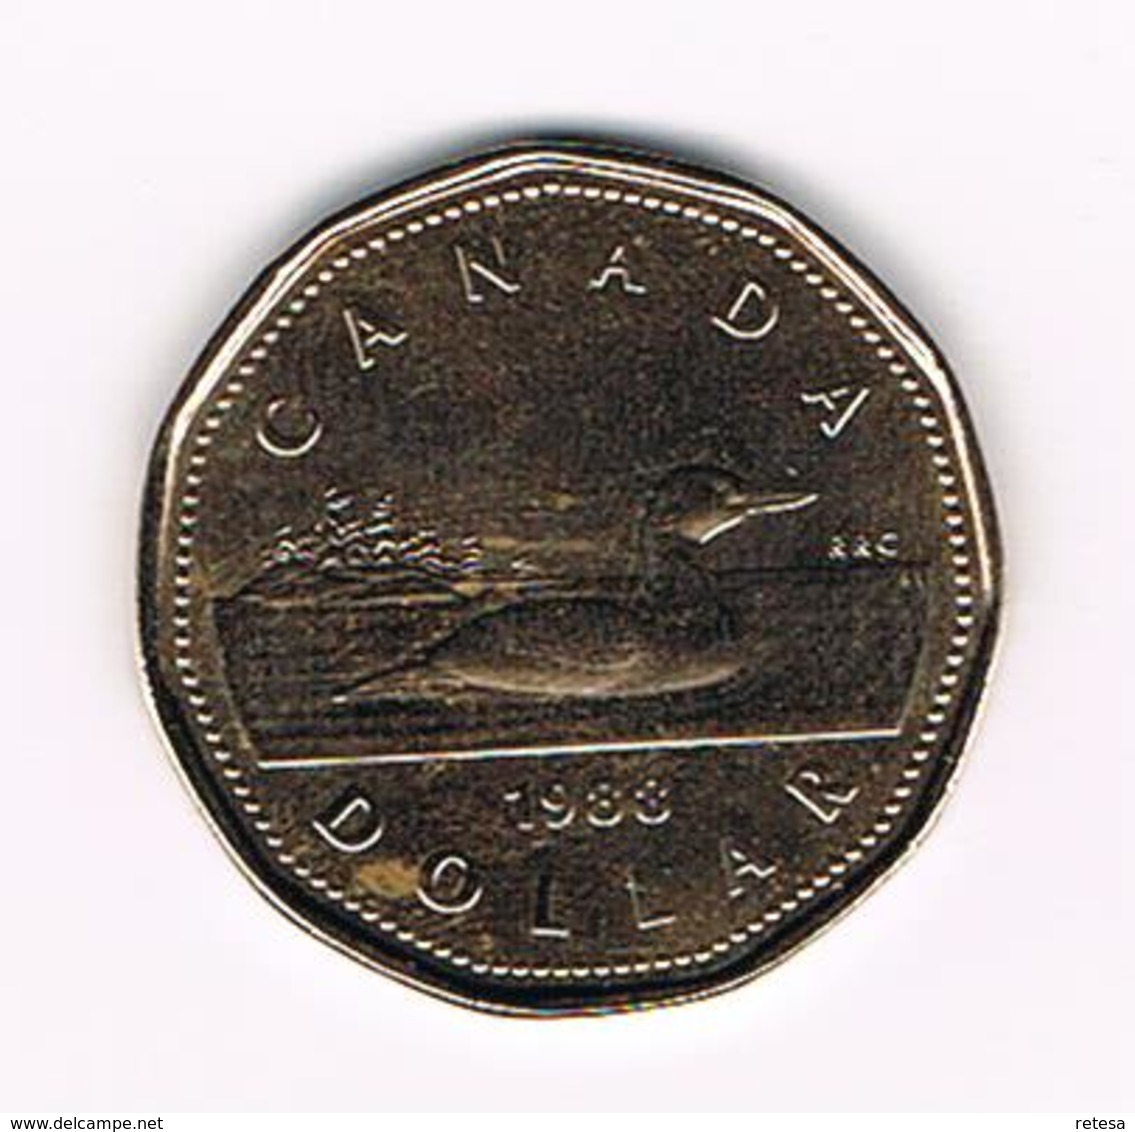 &-  CANADA 1 LOON DOLLAR  1988 - Canada